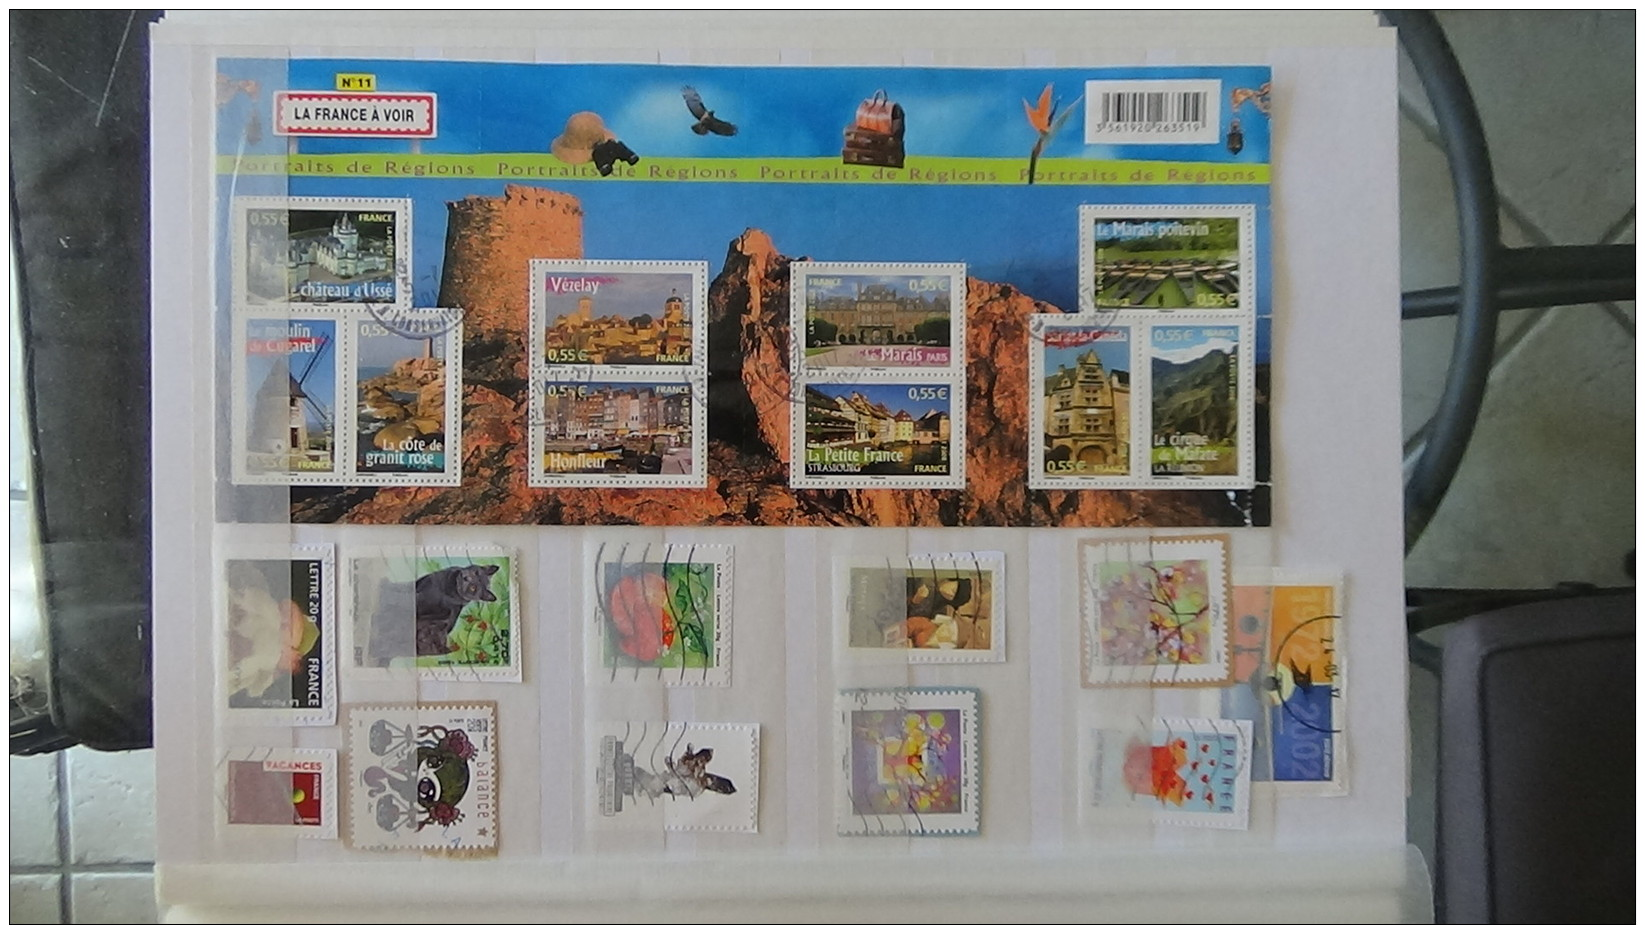 C Album de timbres et blocs de France uniquement en euros. A saisir